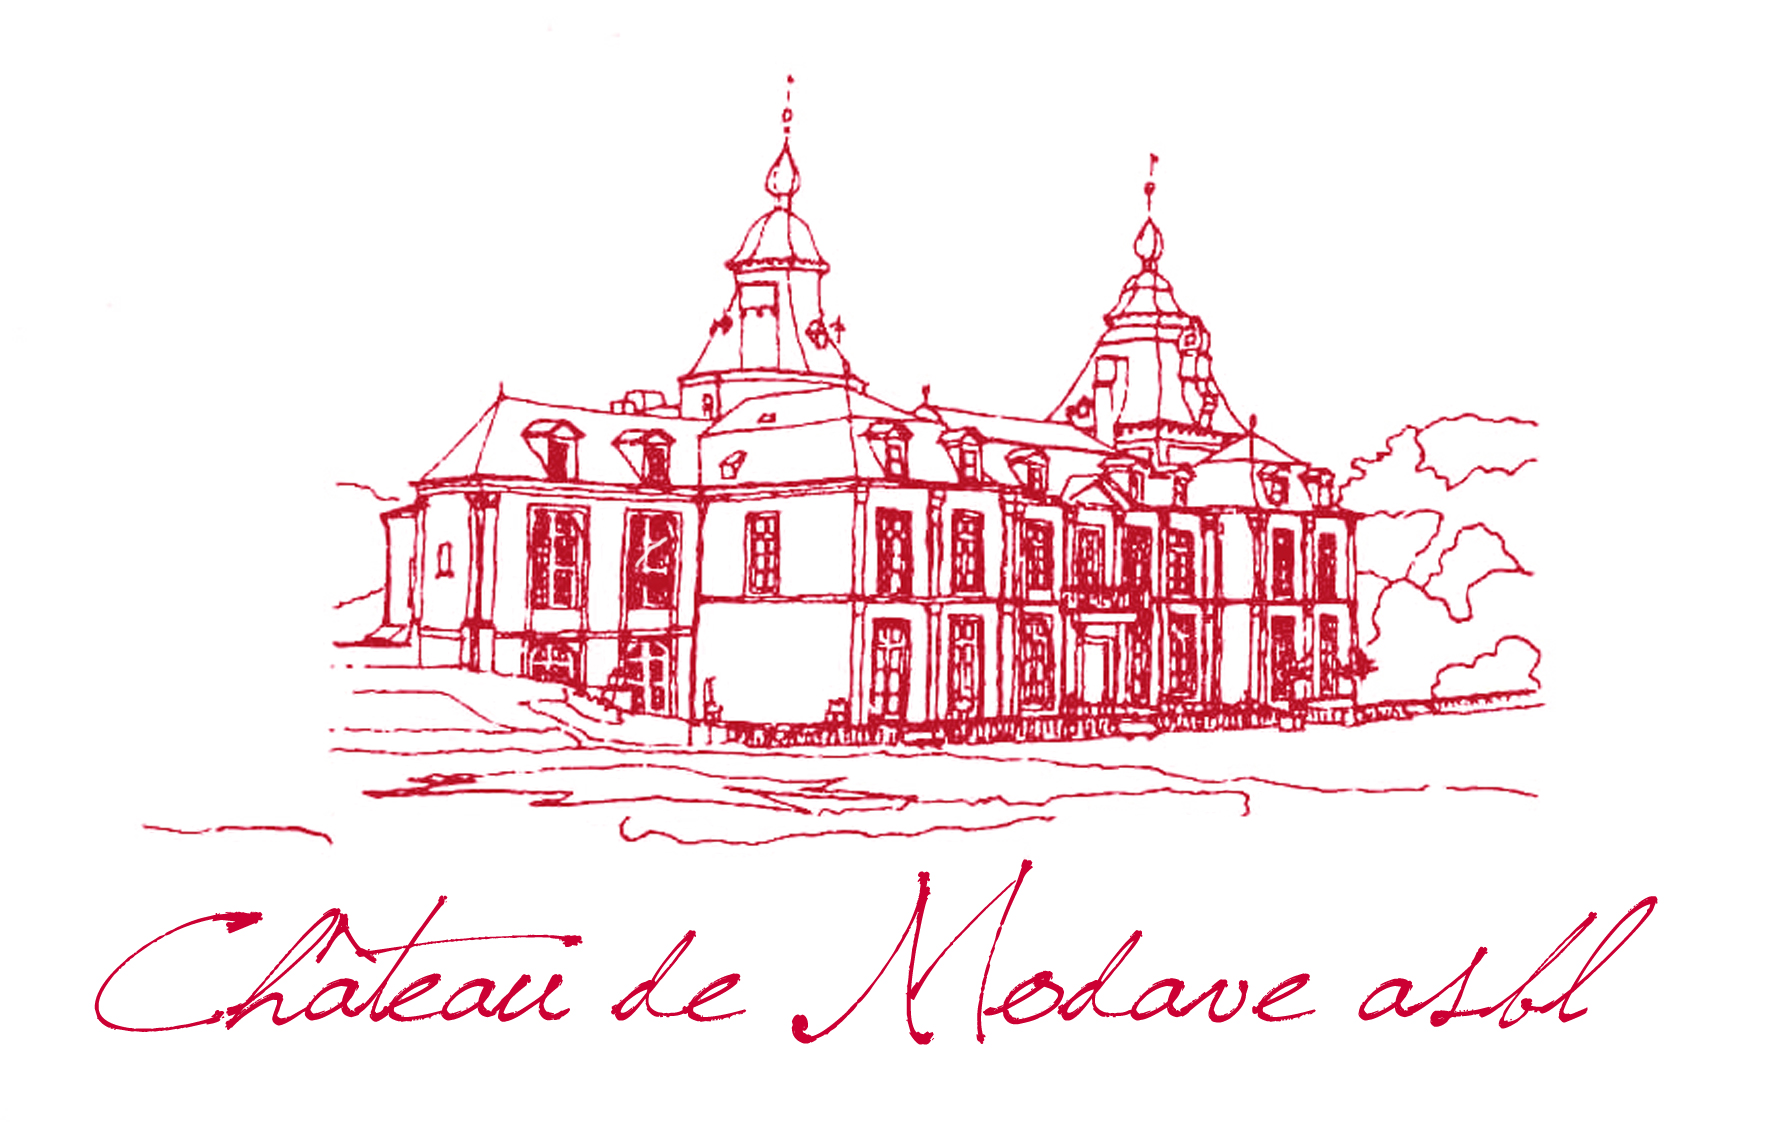 Modave Castle